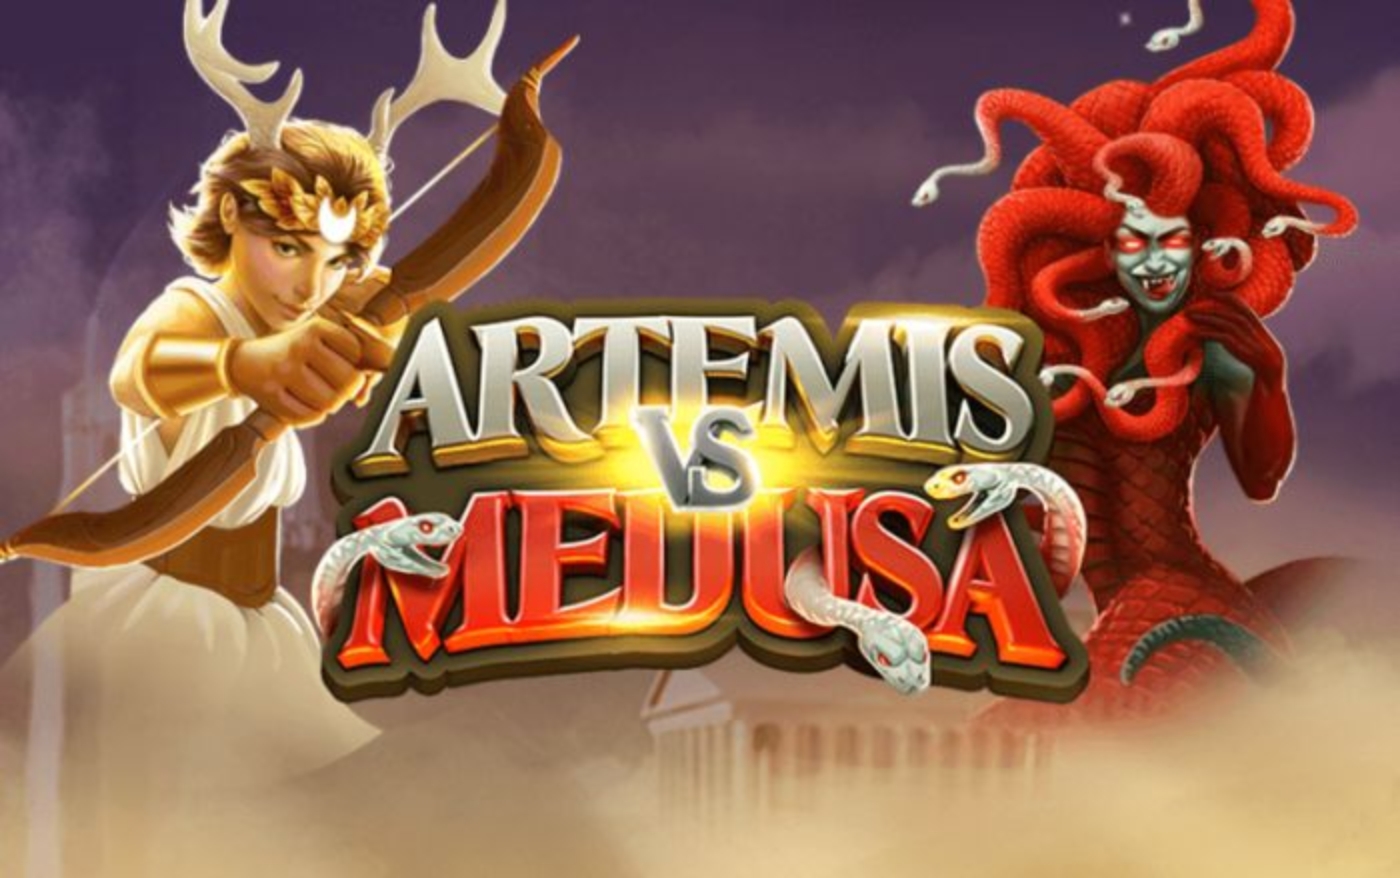 Artemis vs Medusa demo